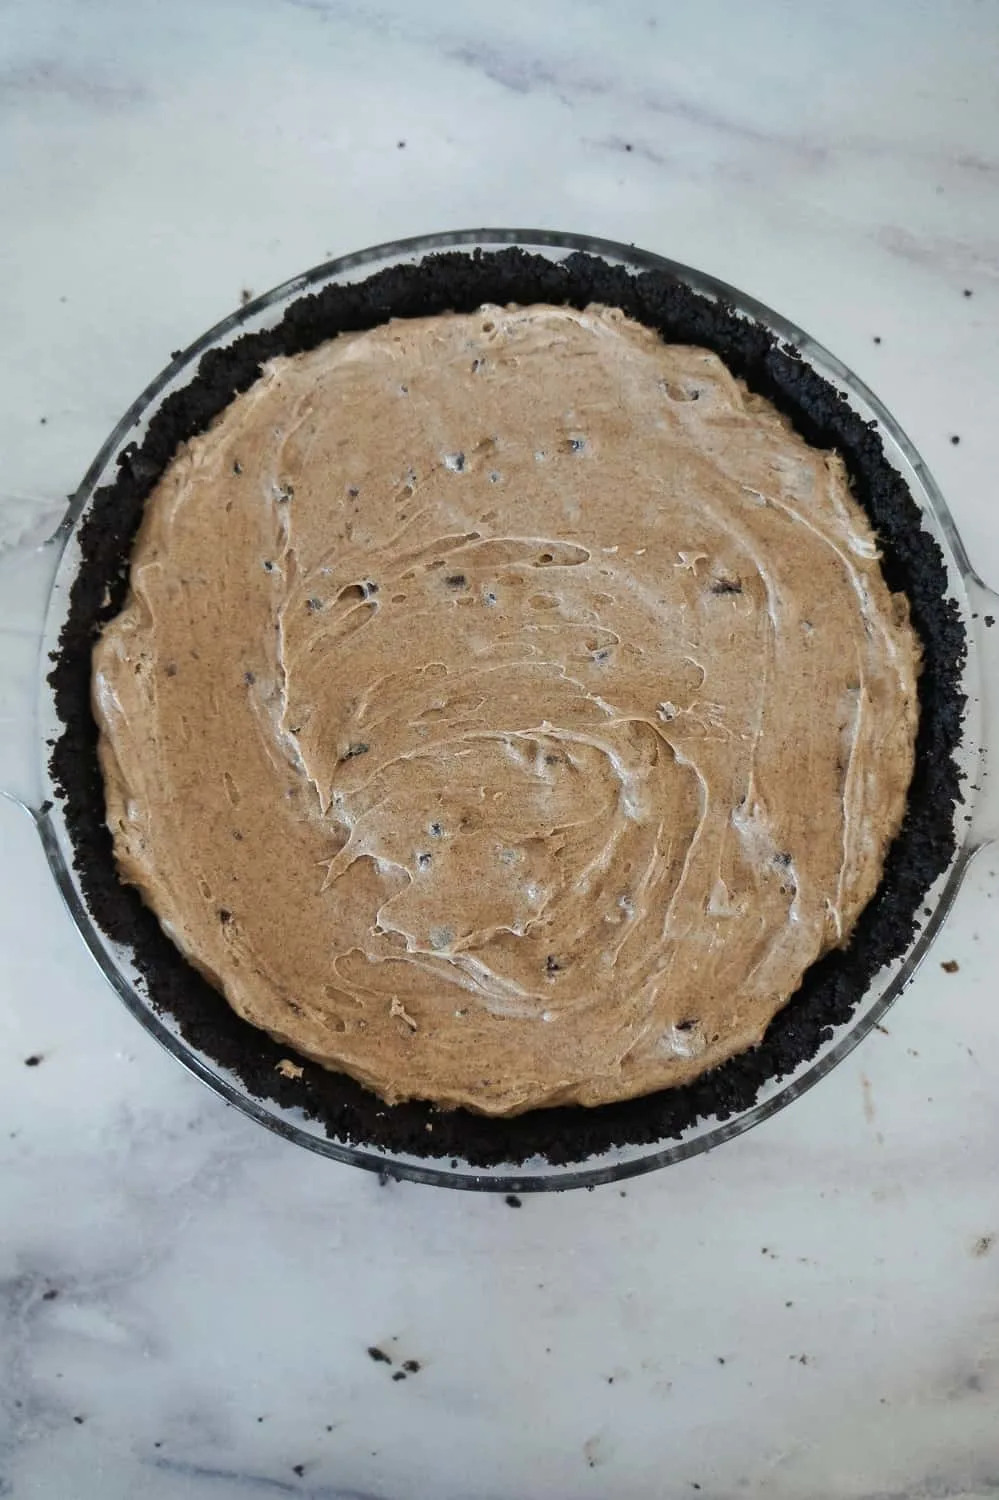 no bake Oreo pie filling in an Oreo crust